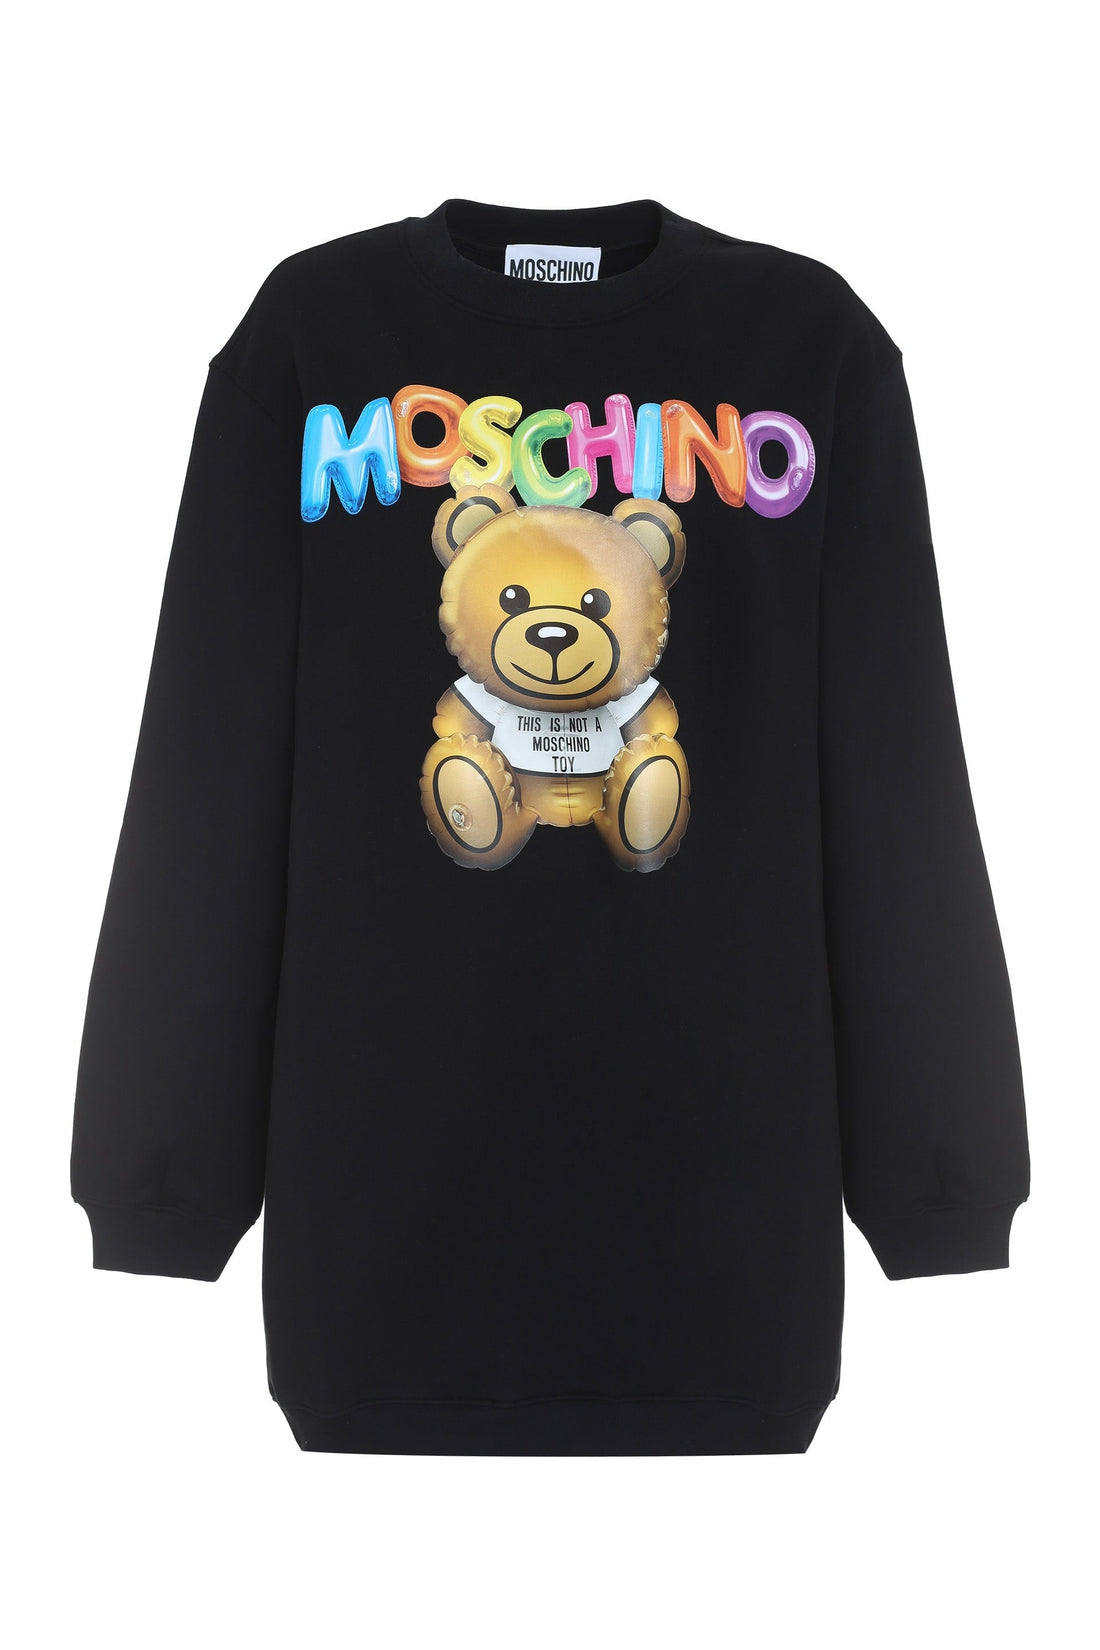 Moschino-OUTLET-SALE-Logo print cotton sweatdress-ARCHIVIST